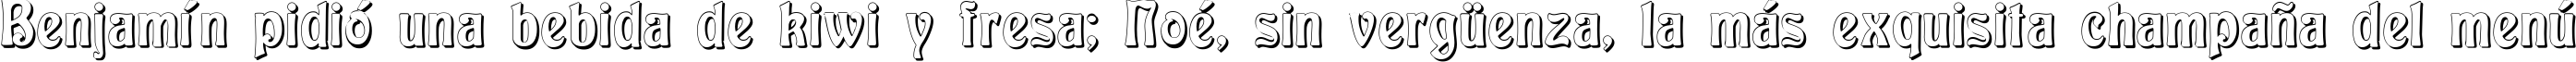 Пример написания шрифтом Baldur Shadow текста на испанском